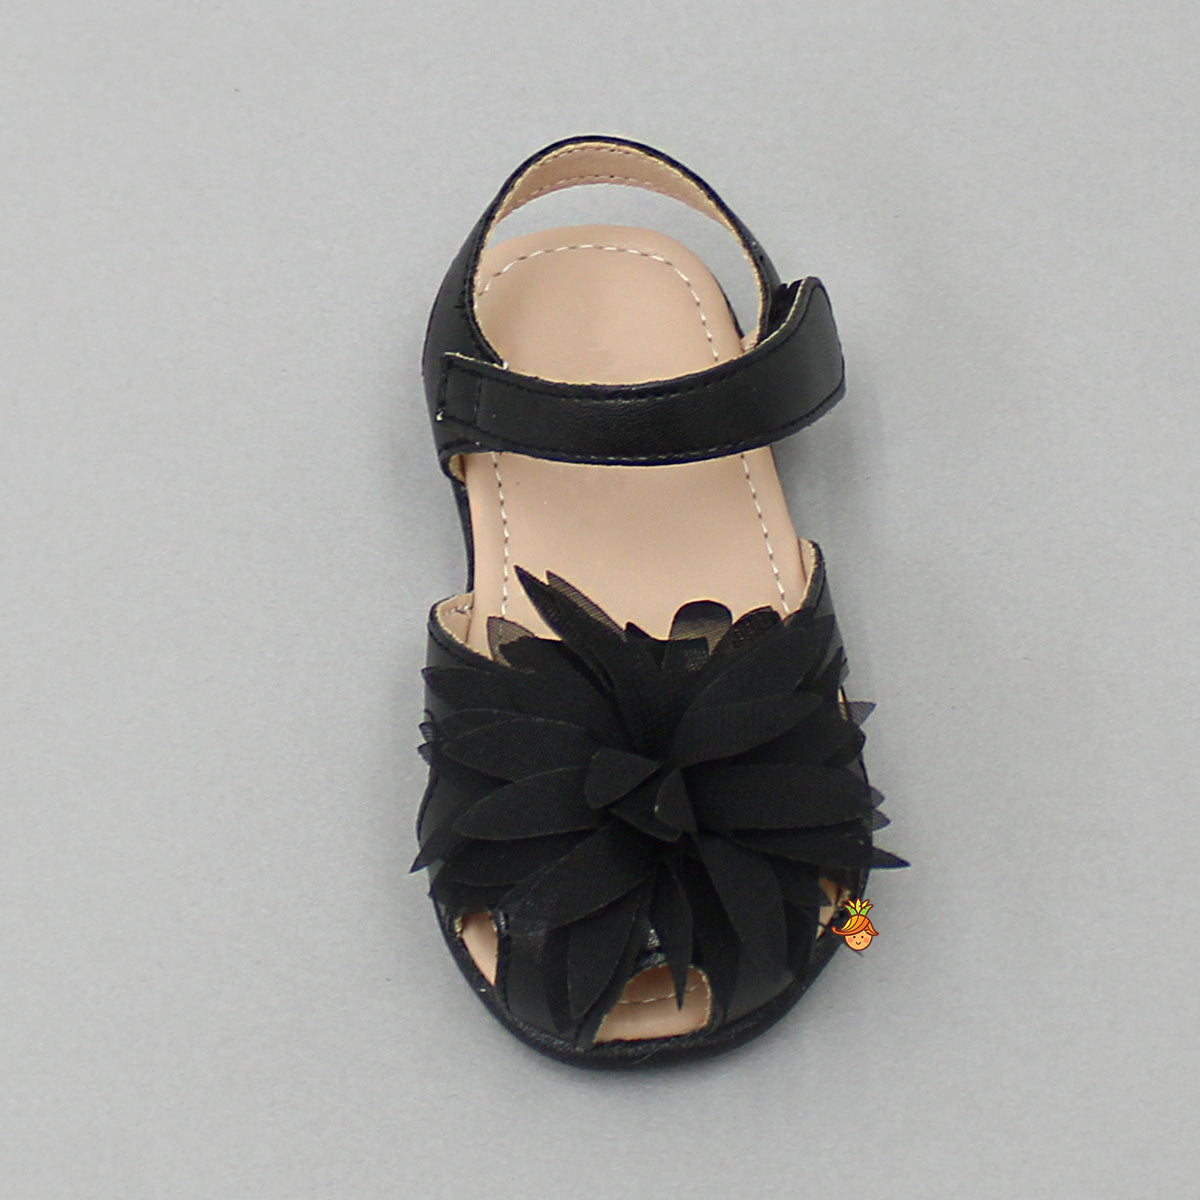 Fabric Flower Enhanced Black Sandal